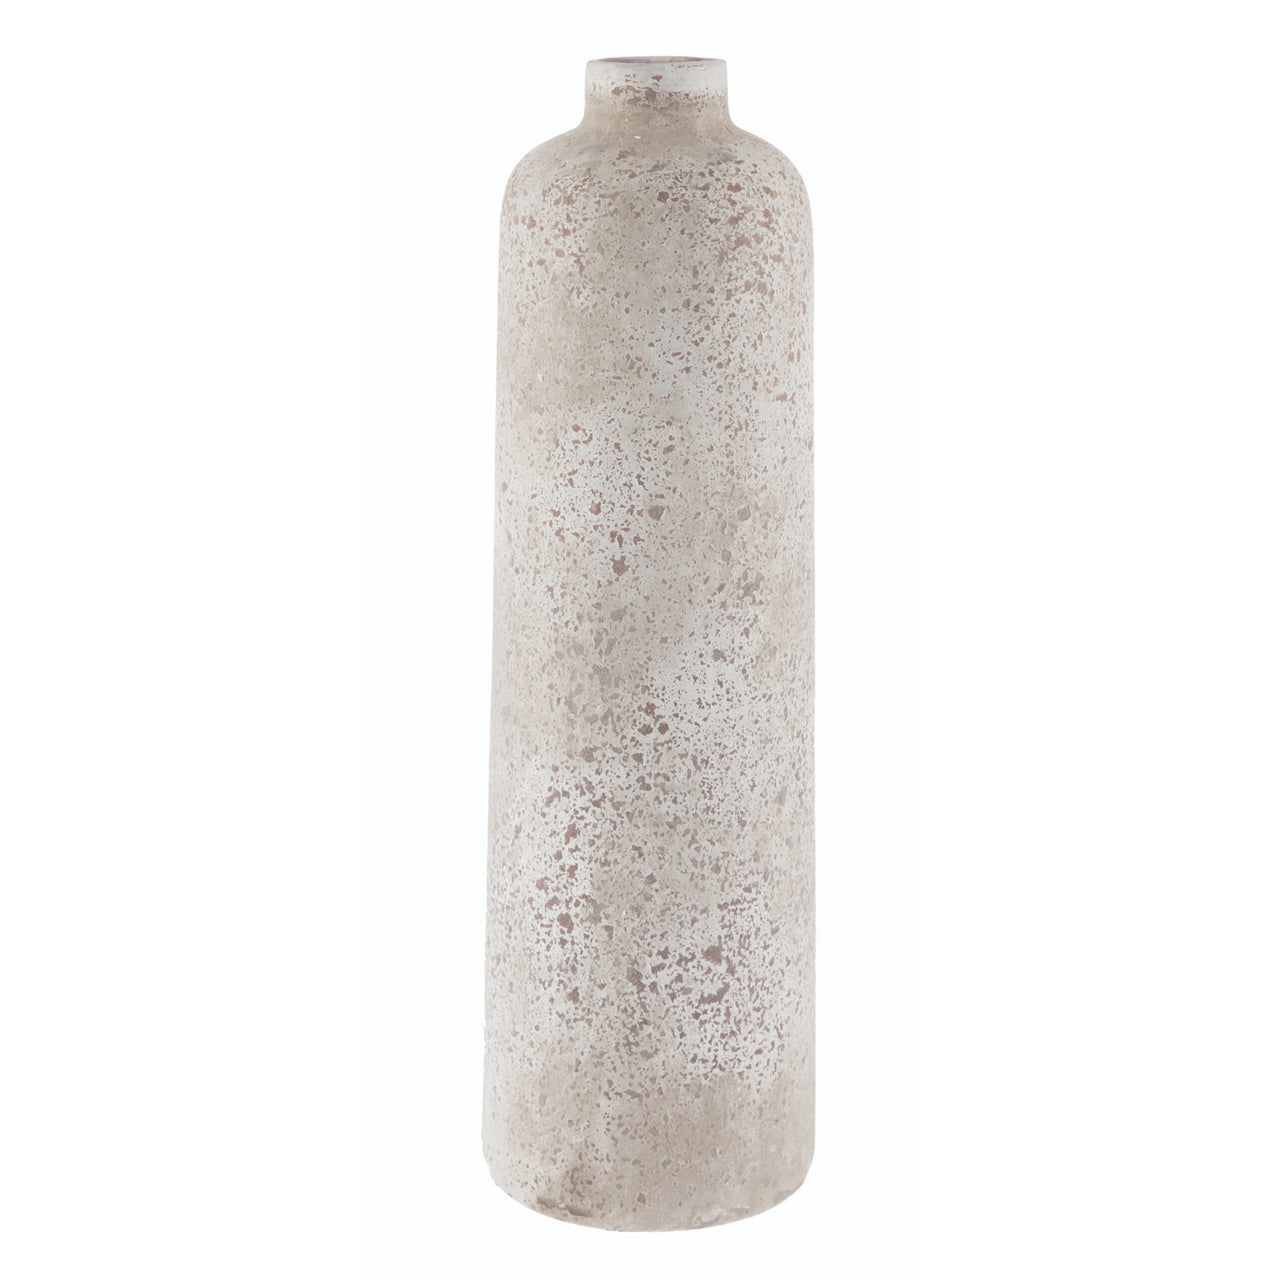 Tall Ceramic Bottle Vase - Medium